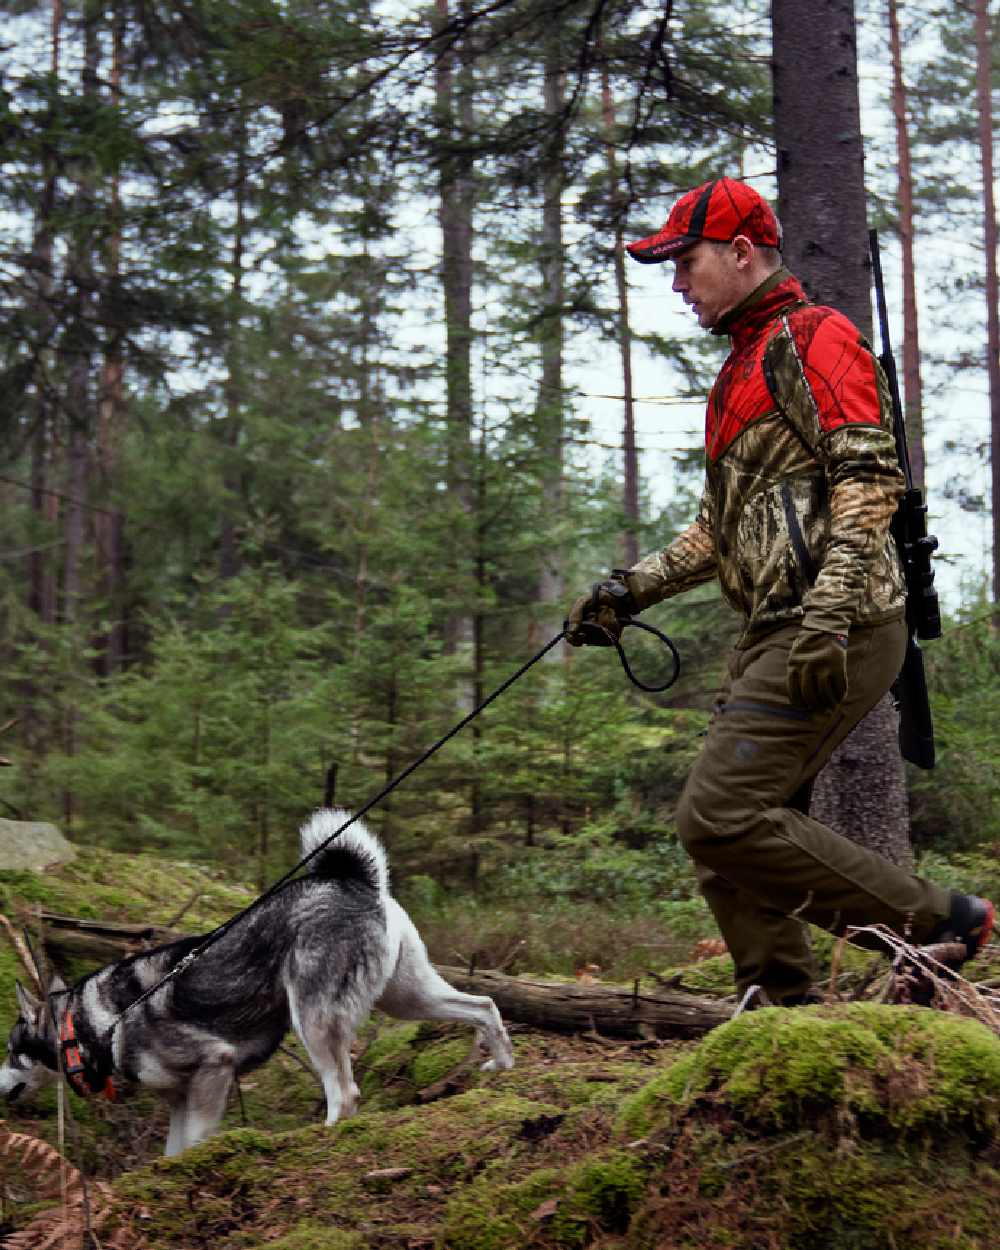 Hunting Green/Mossy Oak Break-up Country coloured Harkila Kamko Camo Reversible WSP Jacket worn by dogwalker in forest